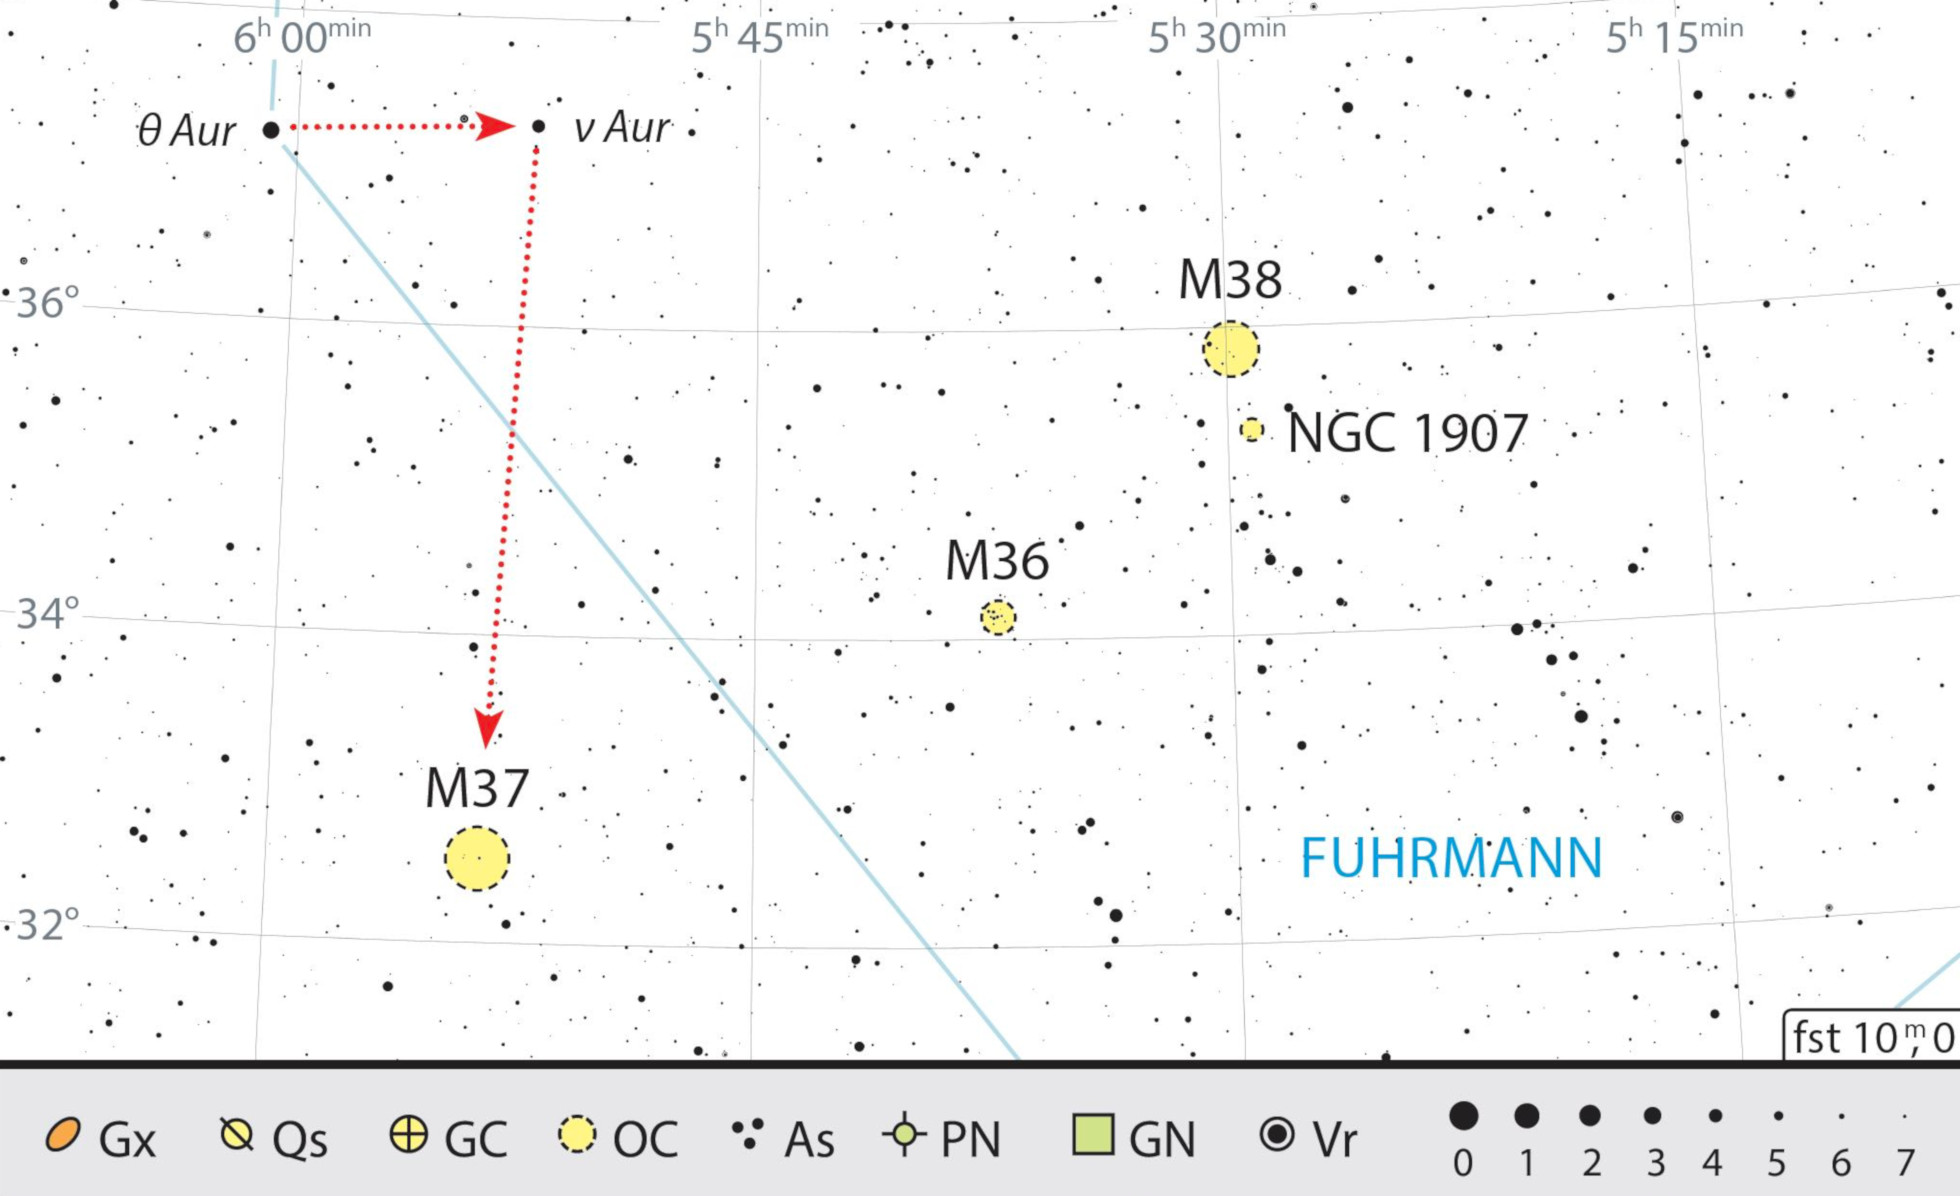 Mappa celeste di M37. J. Scholten